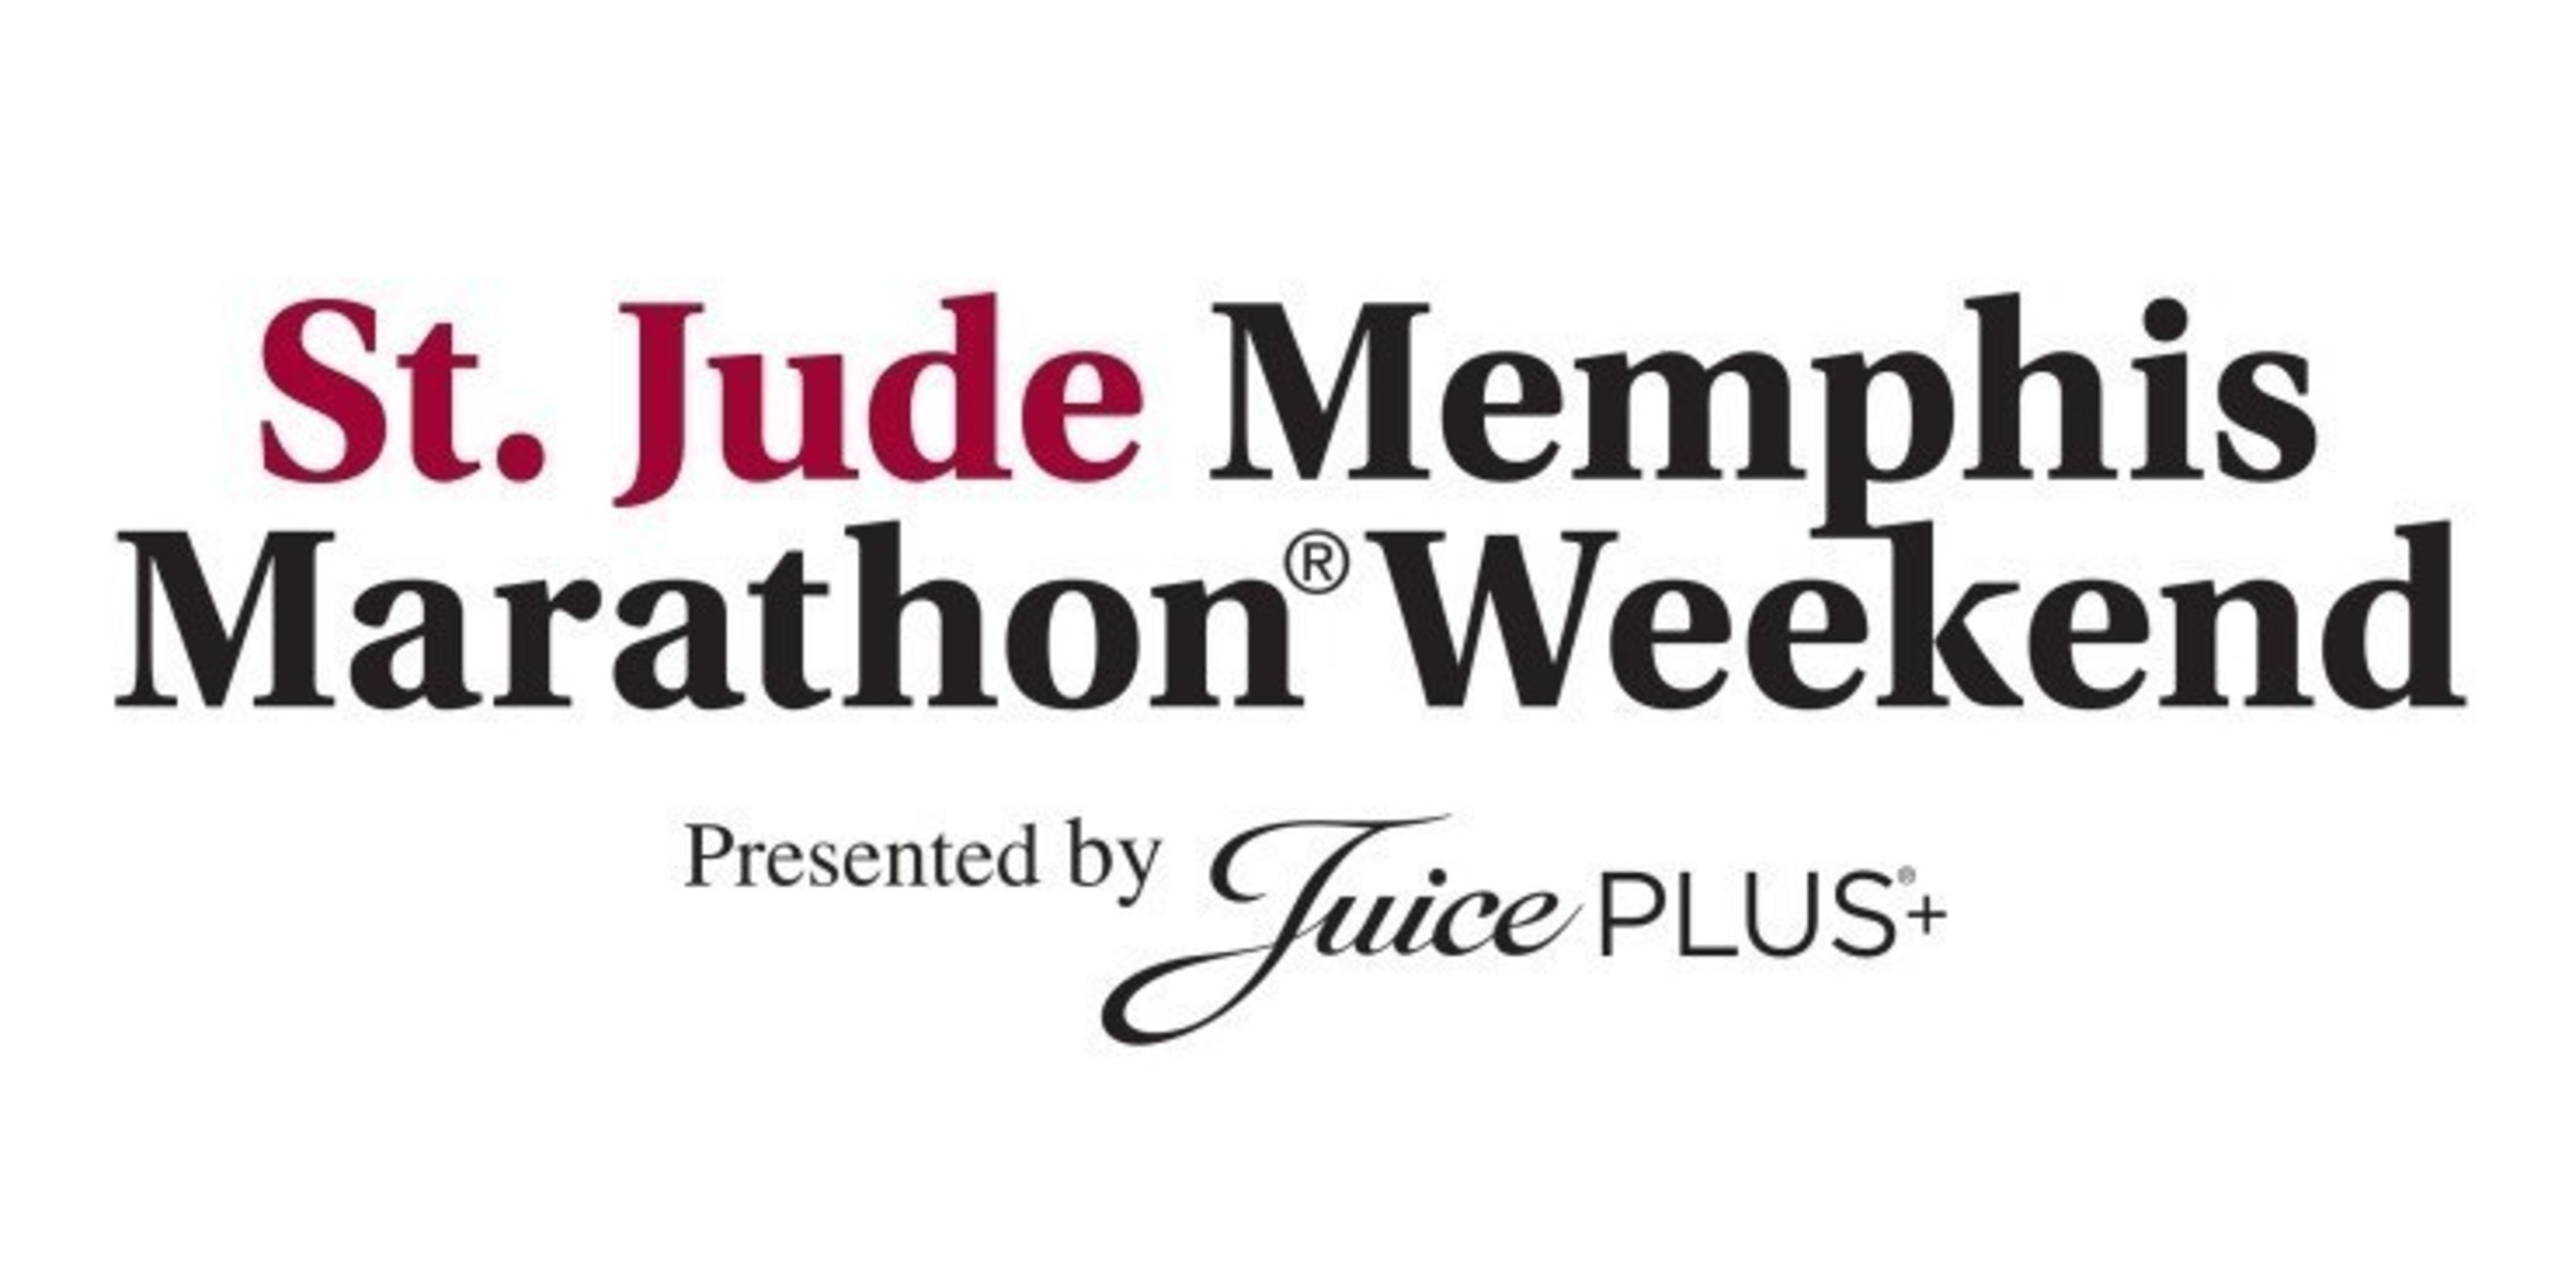 St. Jude Memphis Marathon Weekend logo